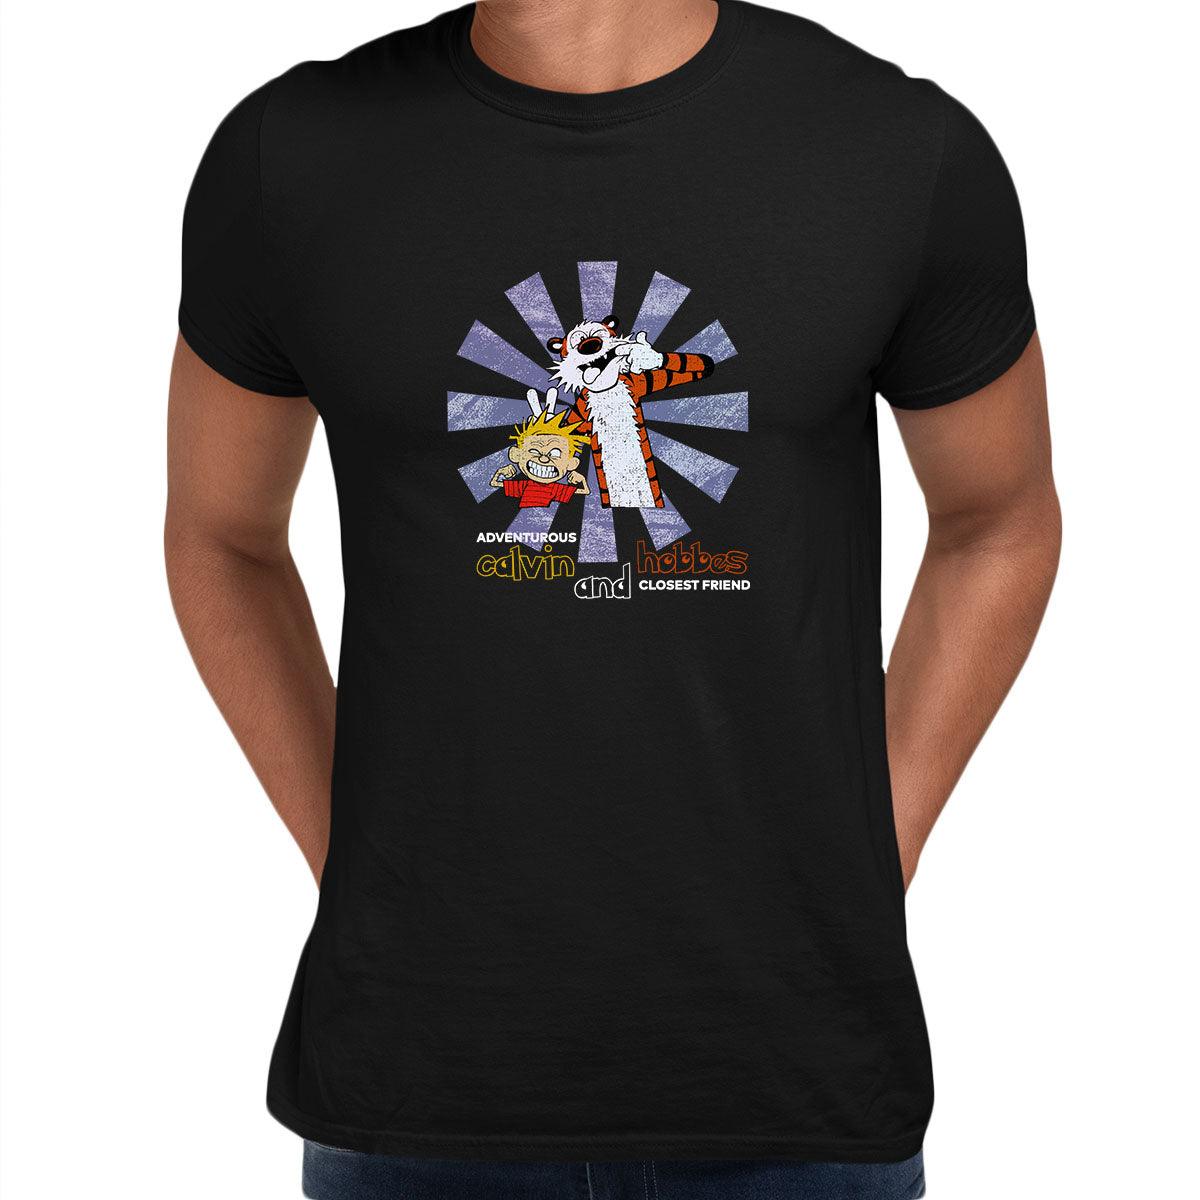 Calvin and Hobbes Retro Adventure T-shirt - Kuzi Tees